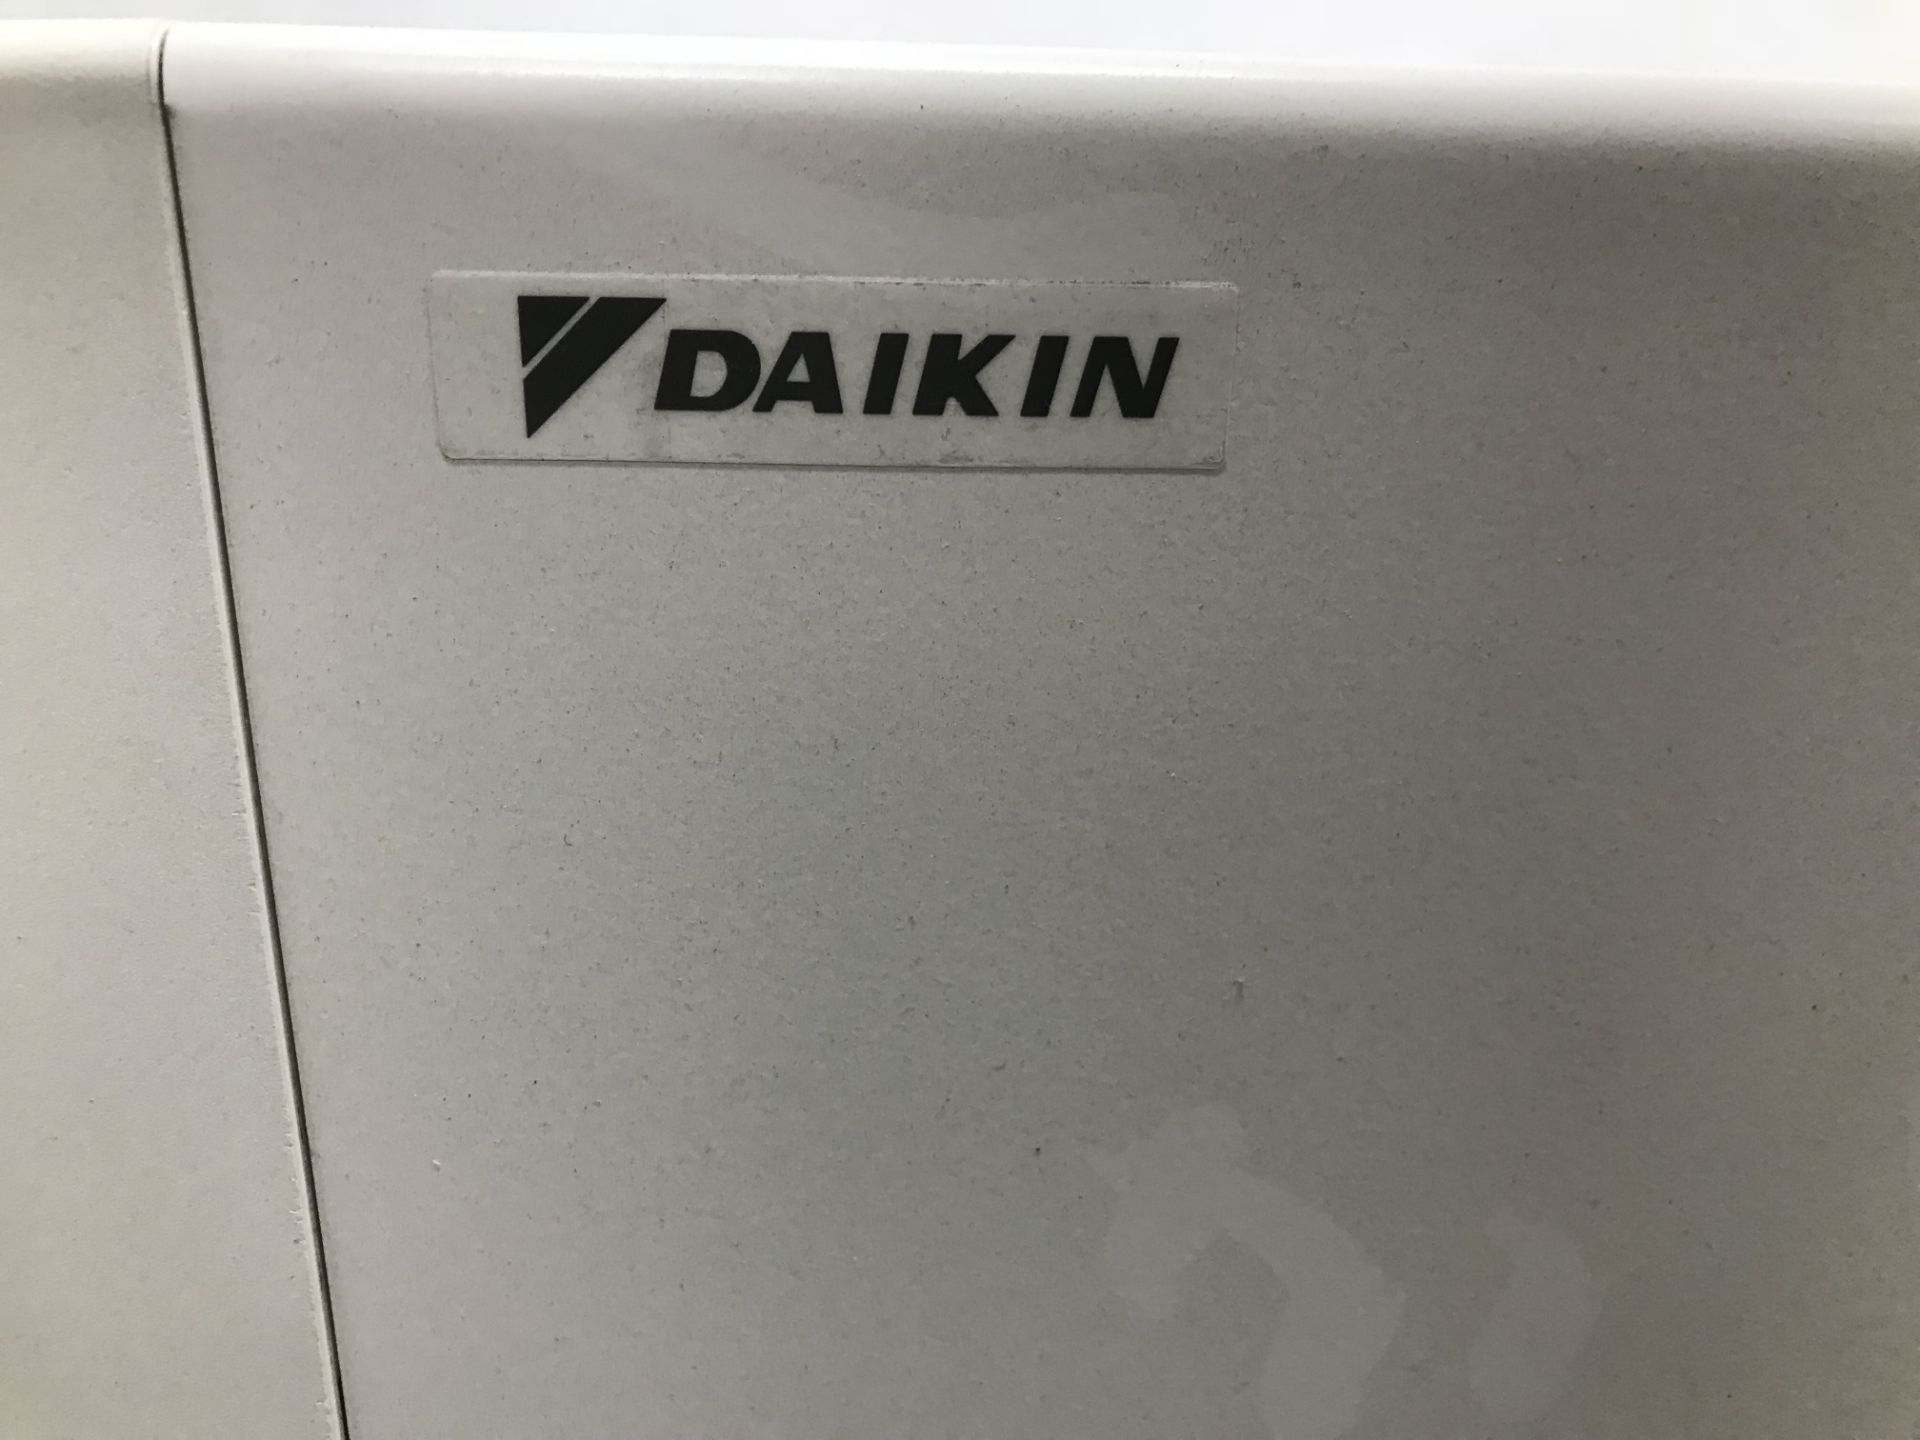 Daikin FXLQ20P2VEB VRV System Air Conditioning Unit - Image 5 of 6